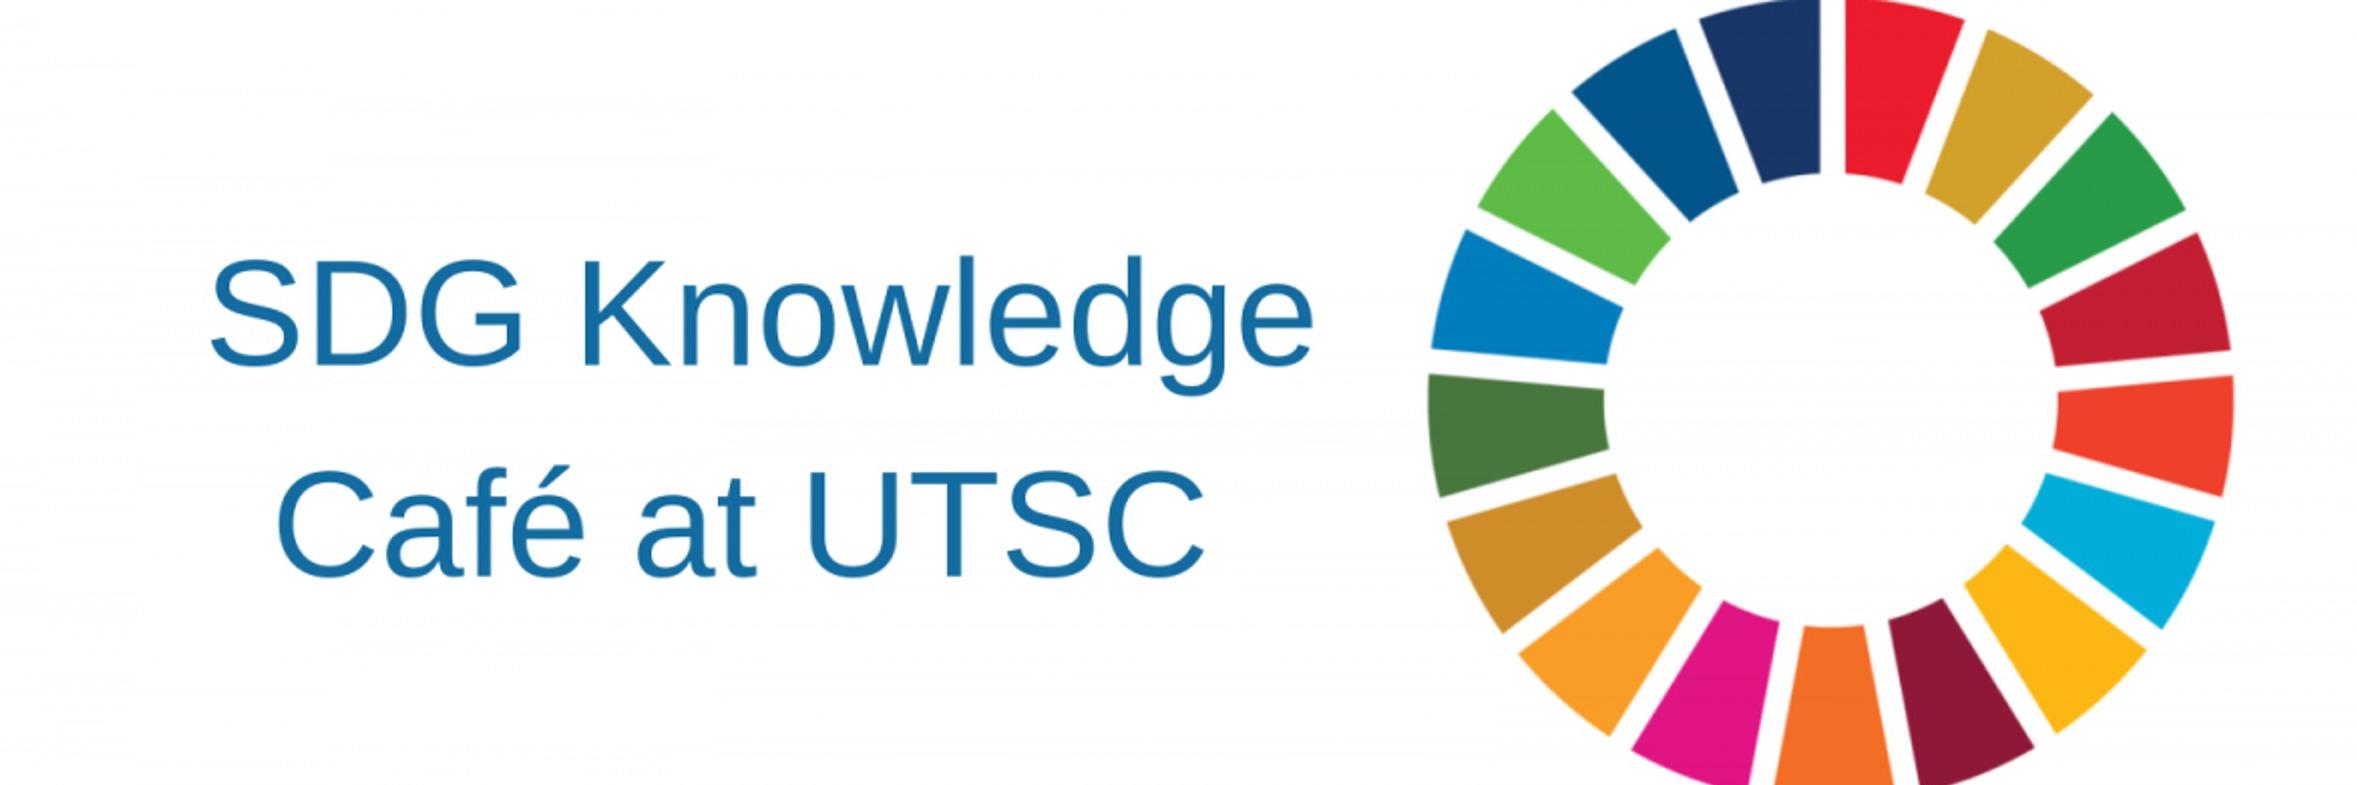 SDG Knowledge Cafe at UTSC banner